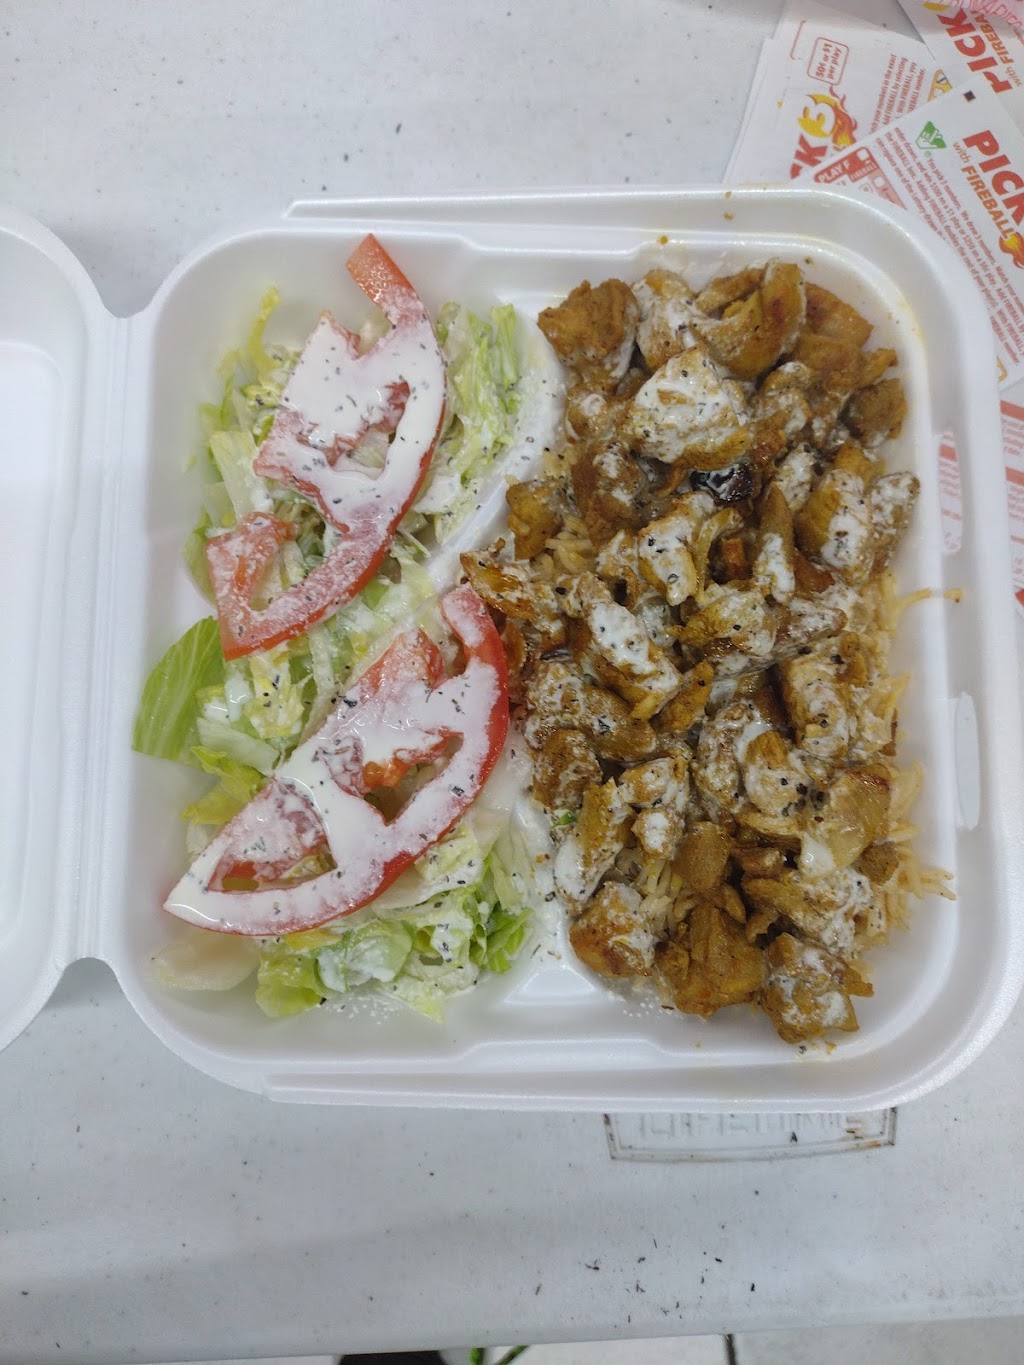 New York Fried Chicken Halal | 3825 S Crater Rd, Petersburg, VA 23805, USA | Phone: (804) 732-4124